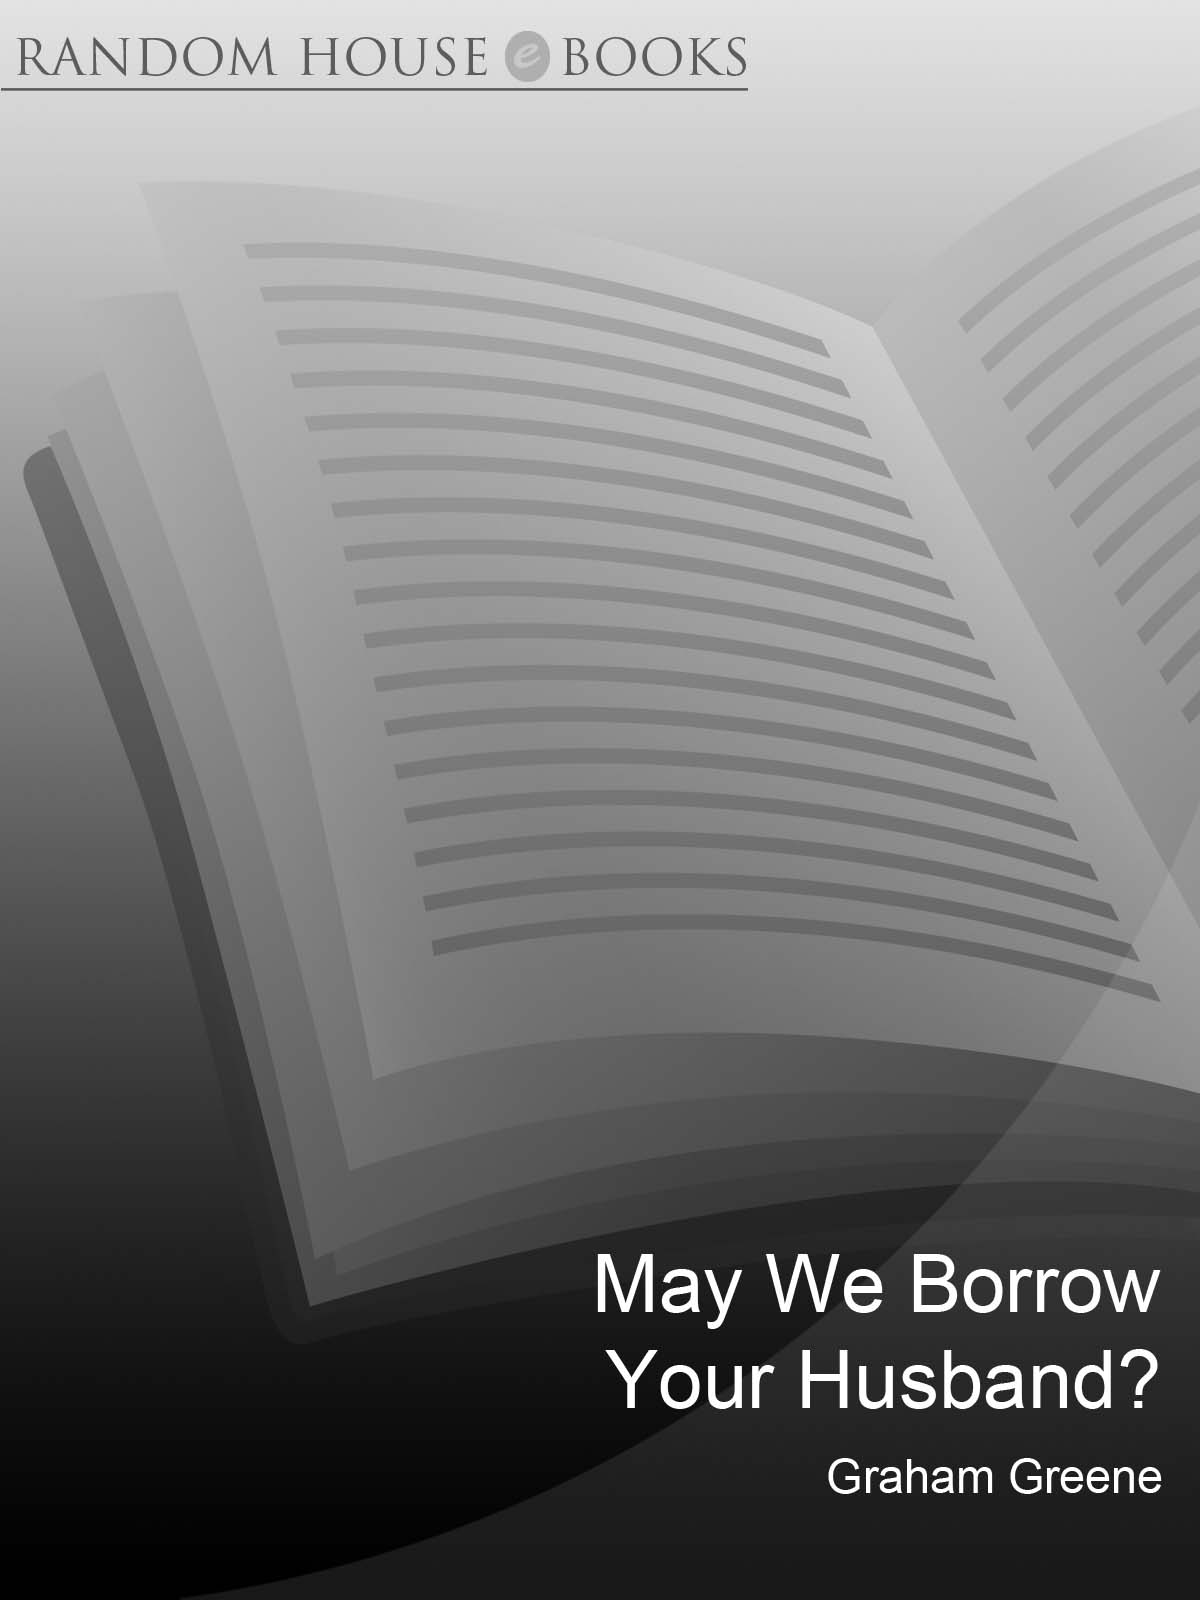 May We Borrow Your Husband? (2000) by Graham Greene